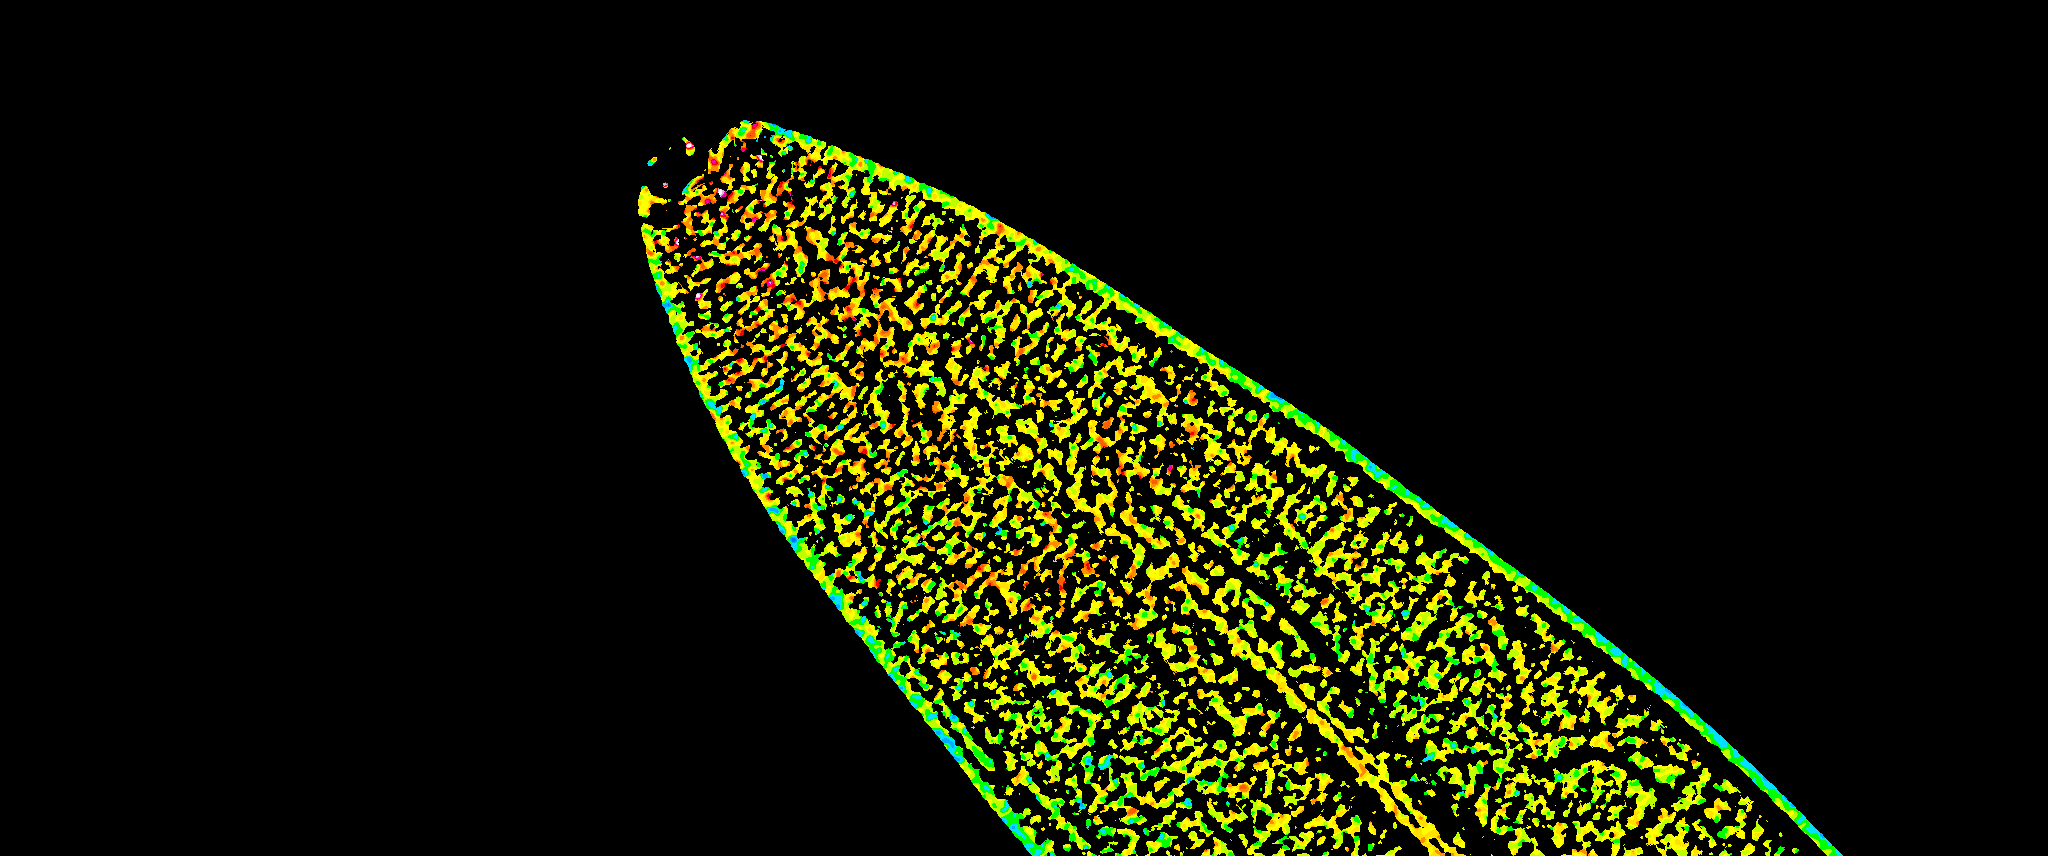 part of nematode C. elegans 